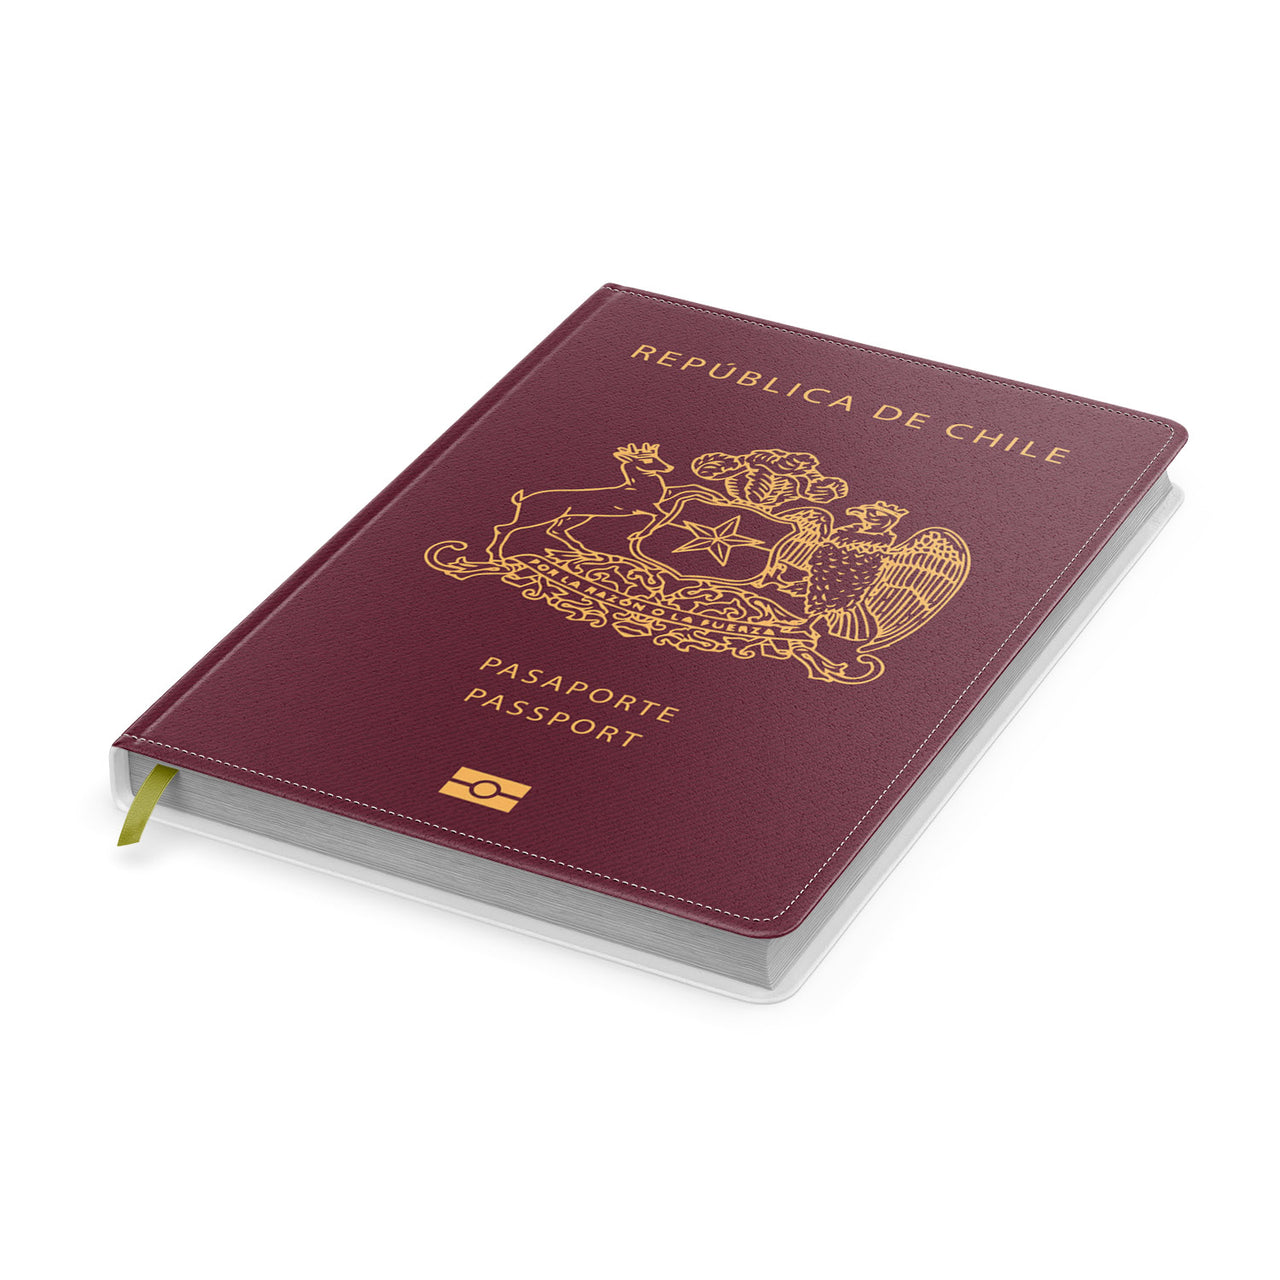 Chile Passport Designed Notebooks